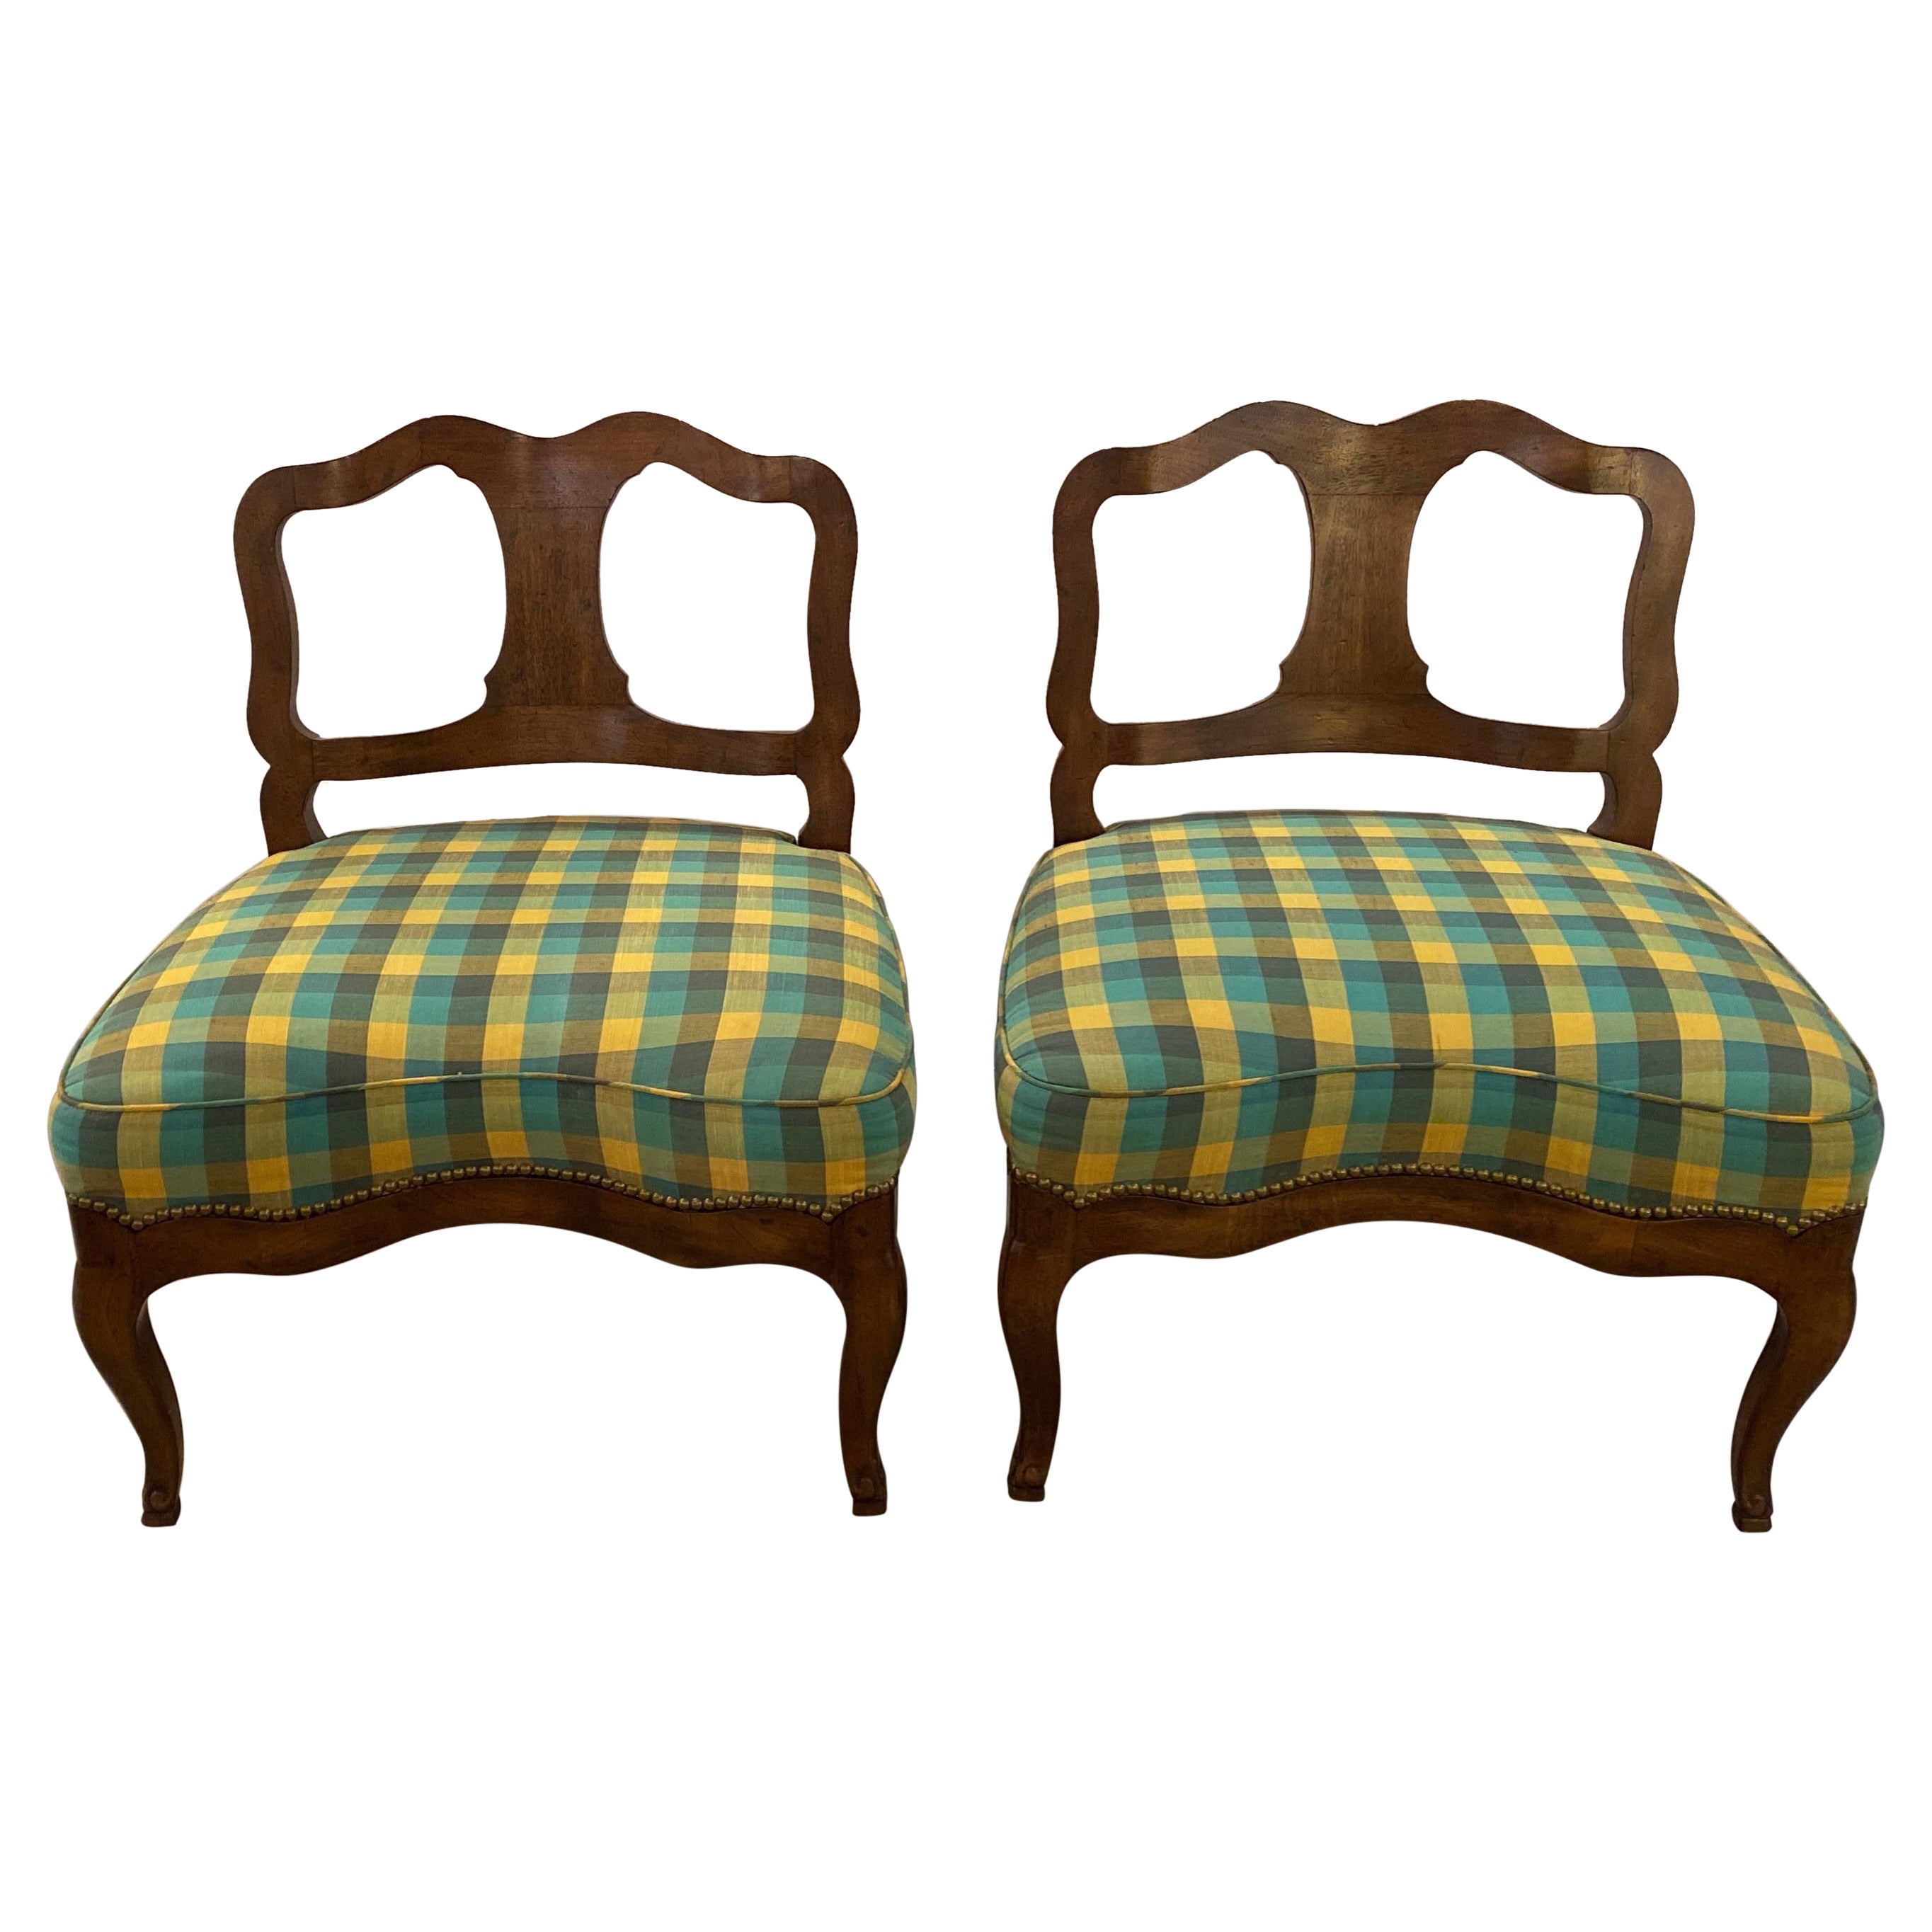 A Pair of Henredon Slipper Chairs 1959